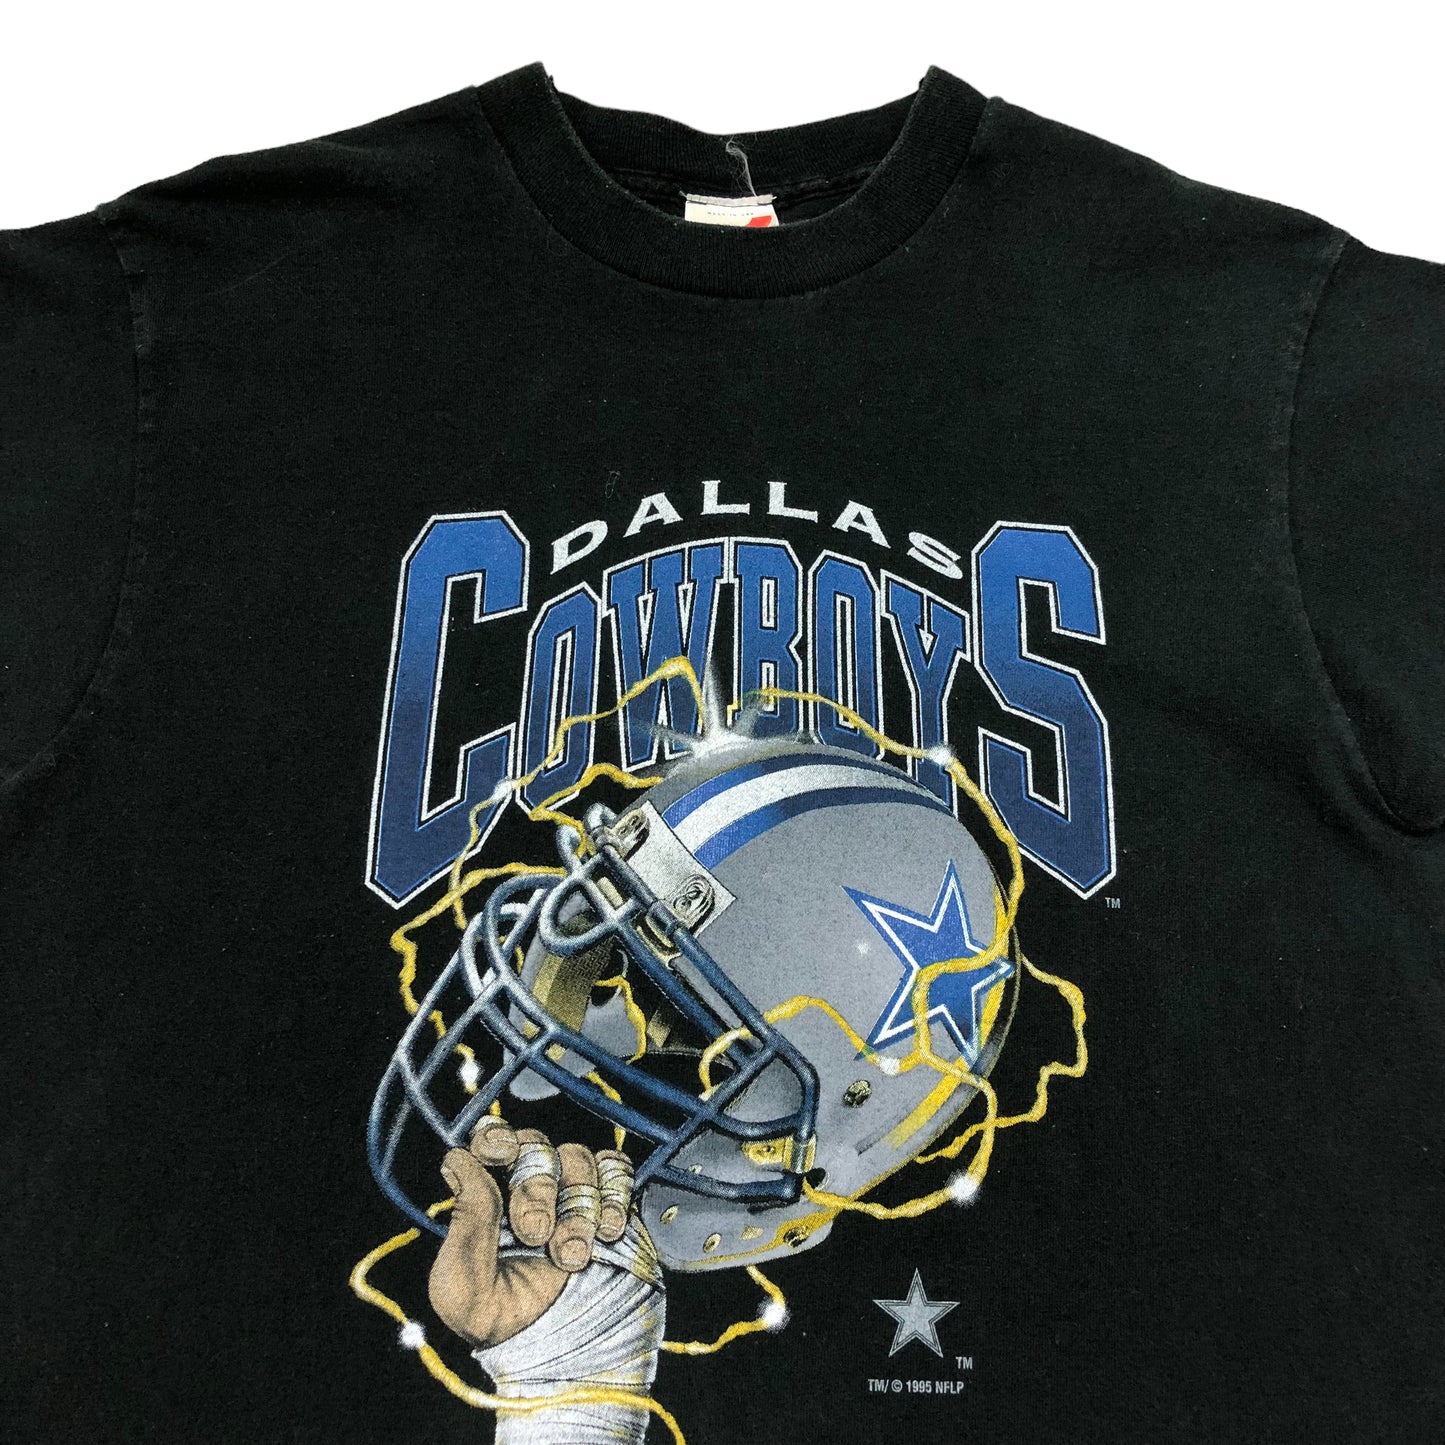 Vintage 1990s Dallas Cowboys Helmet Logo Graphic T-Shirt - Size Medium